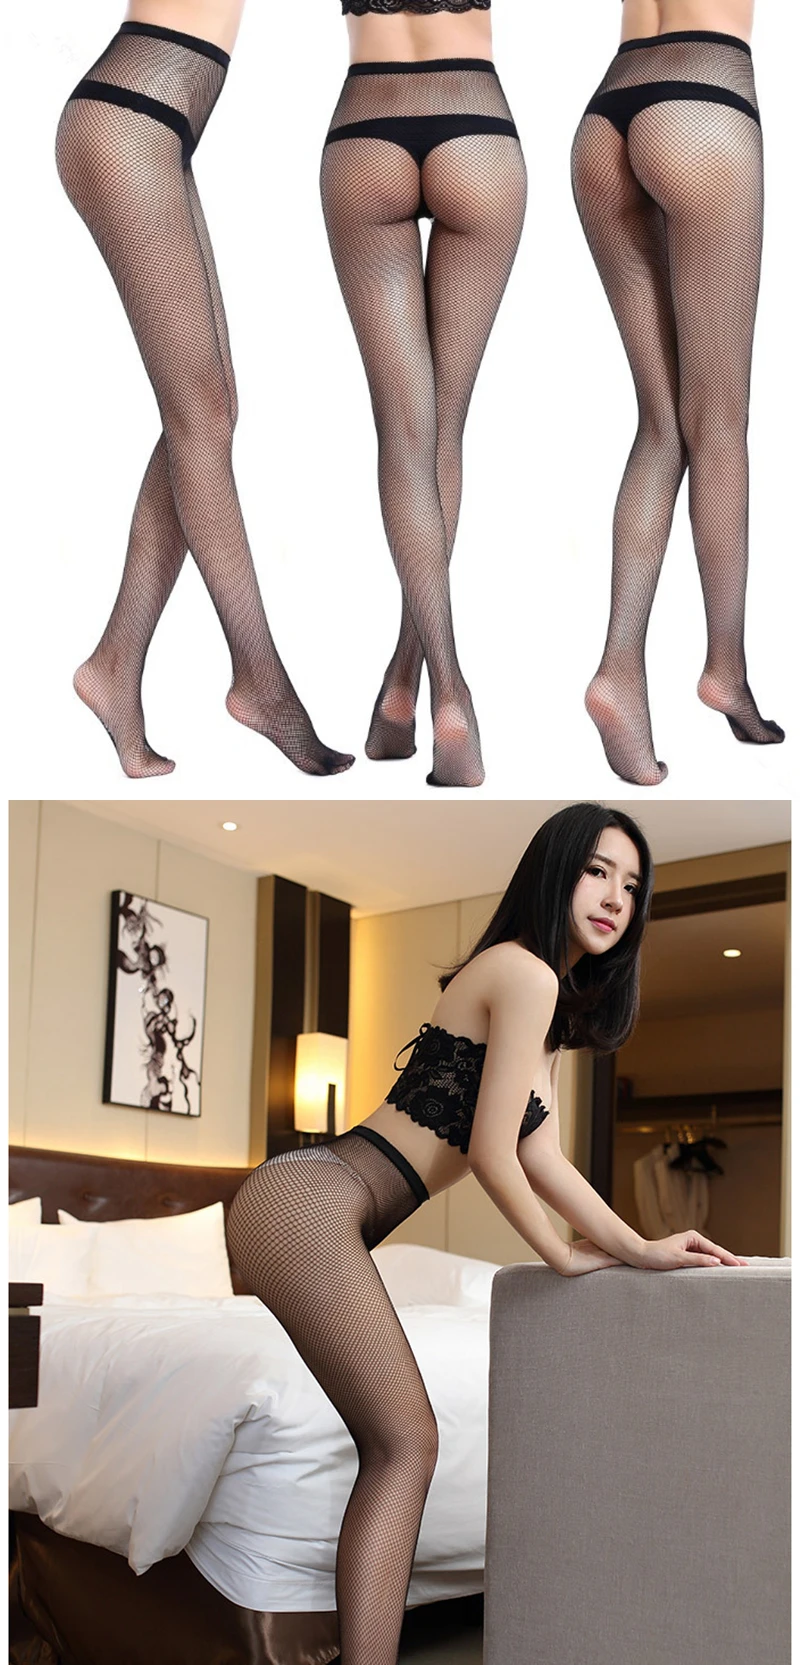 Sex on stockings in Fuzhou